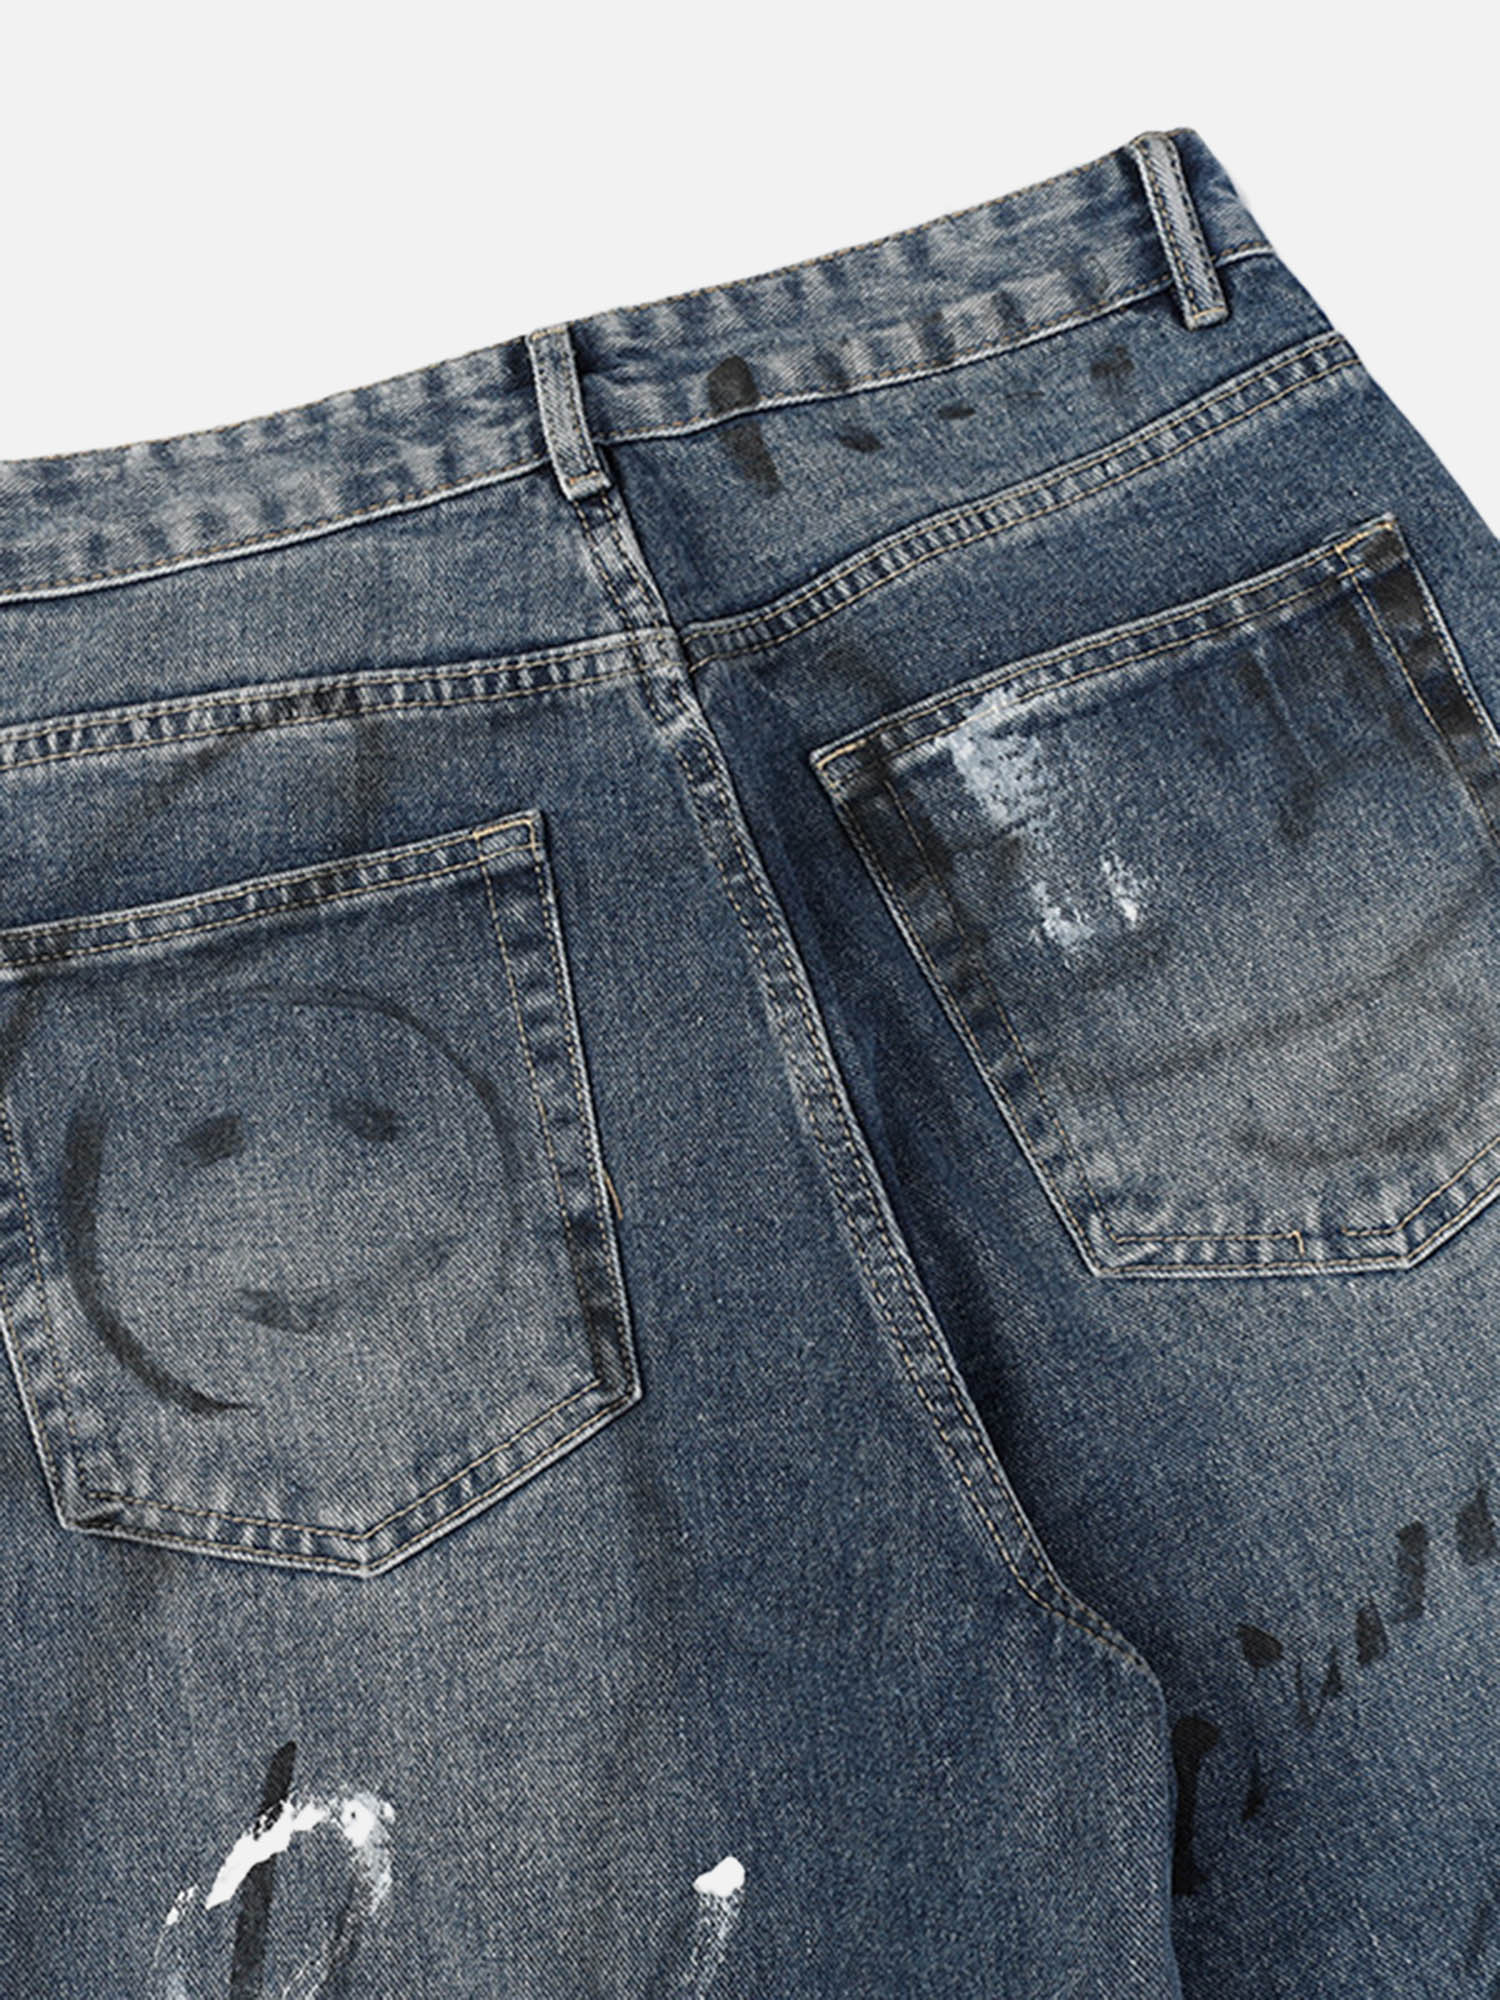 American Street Fashion Fun Graffiti Washed Distressed Jeans